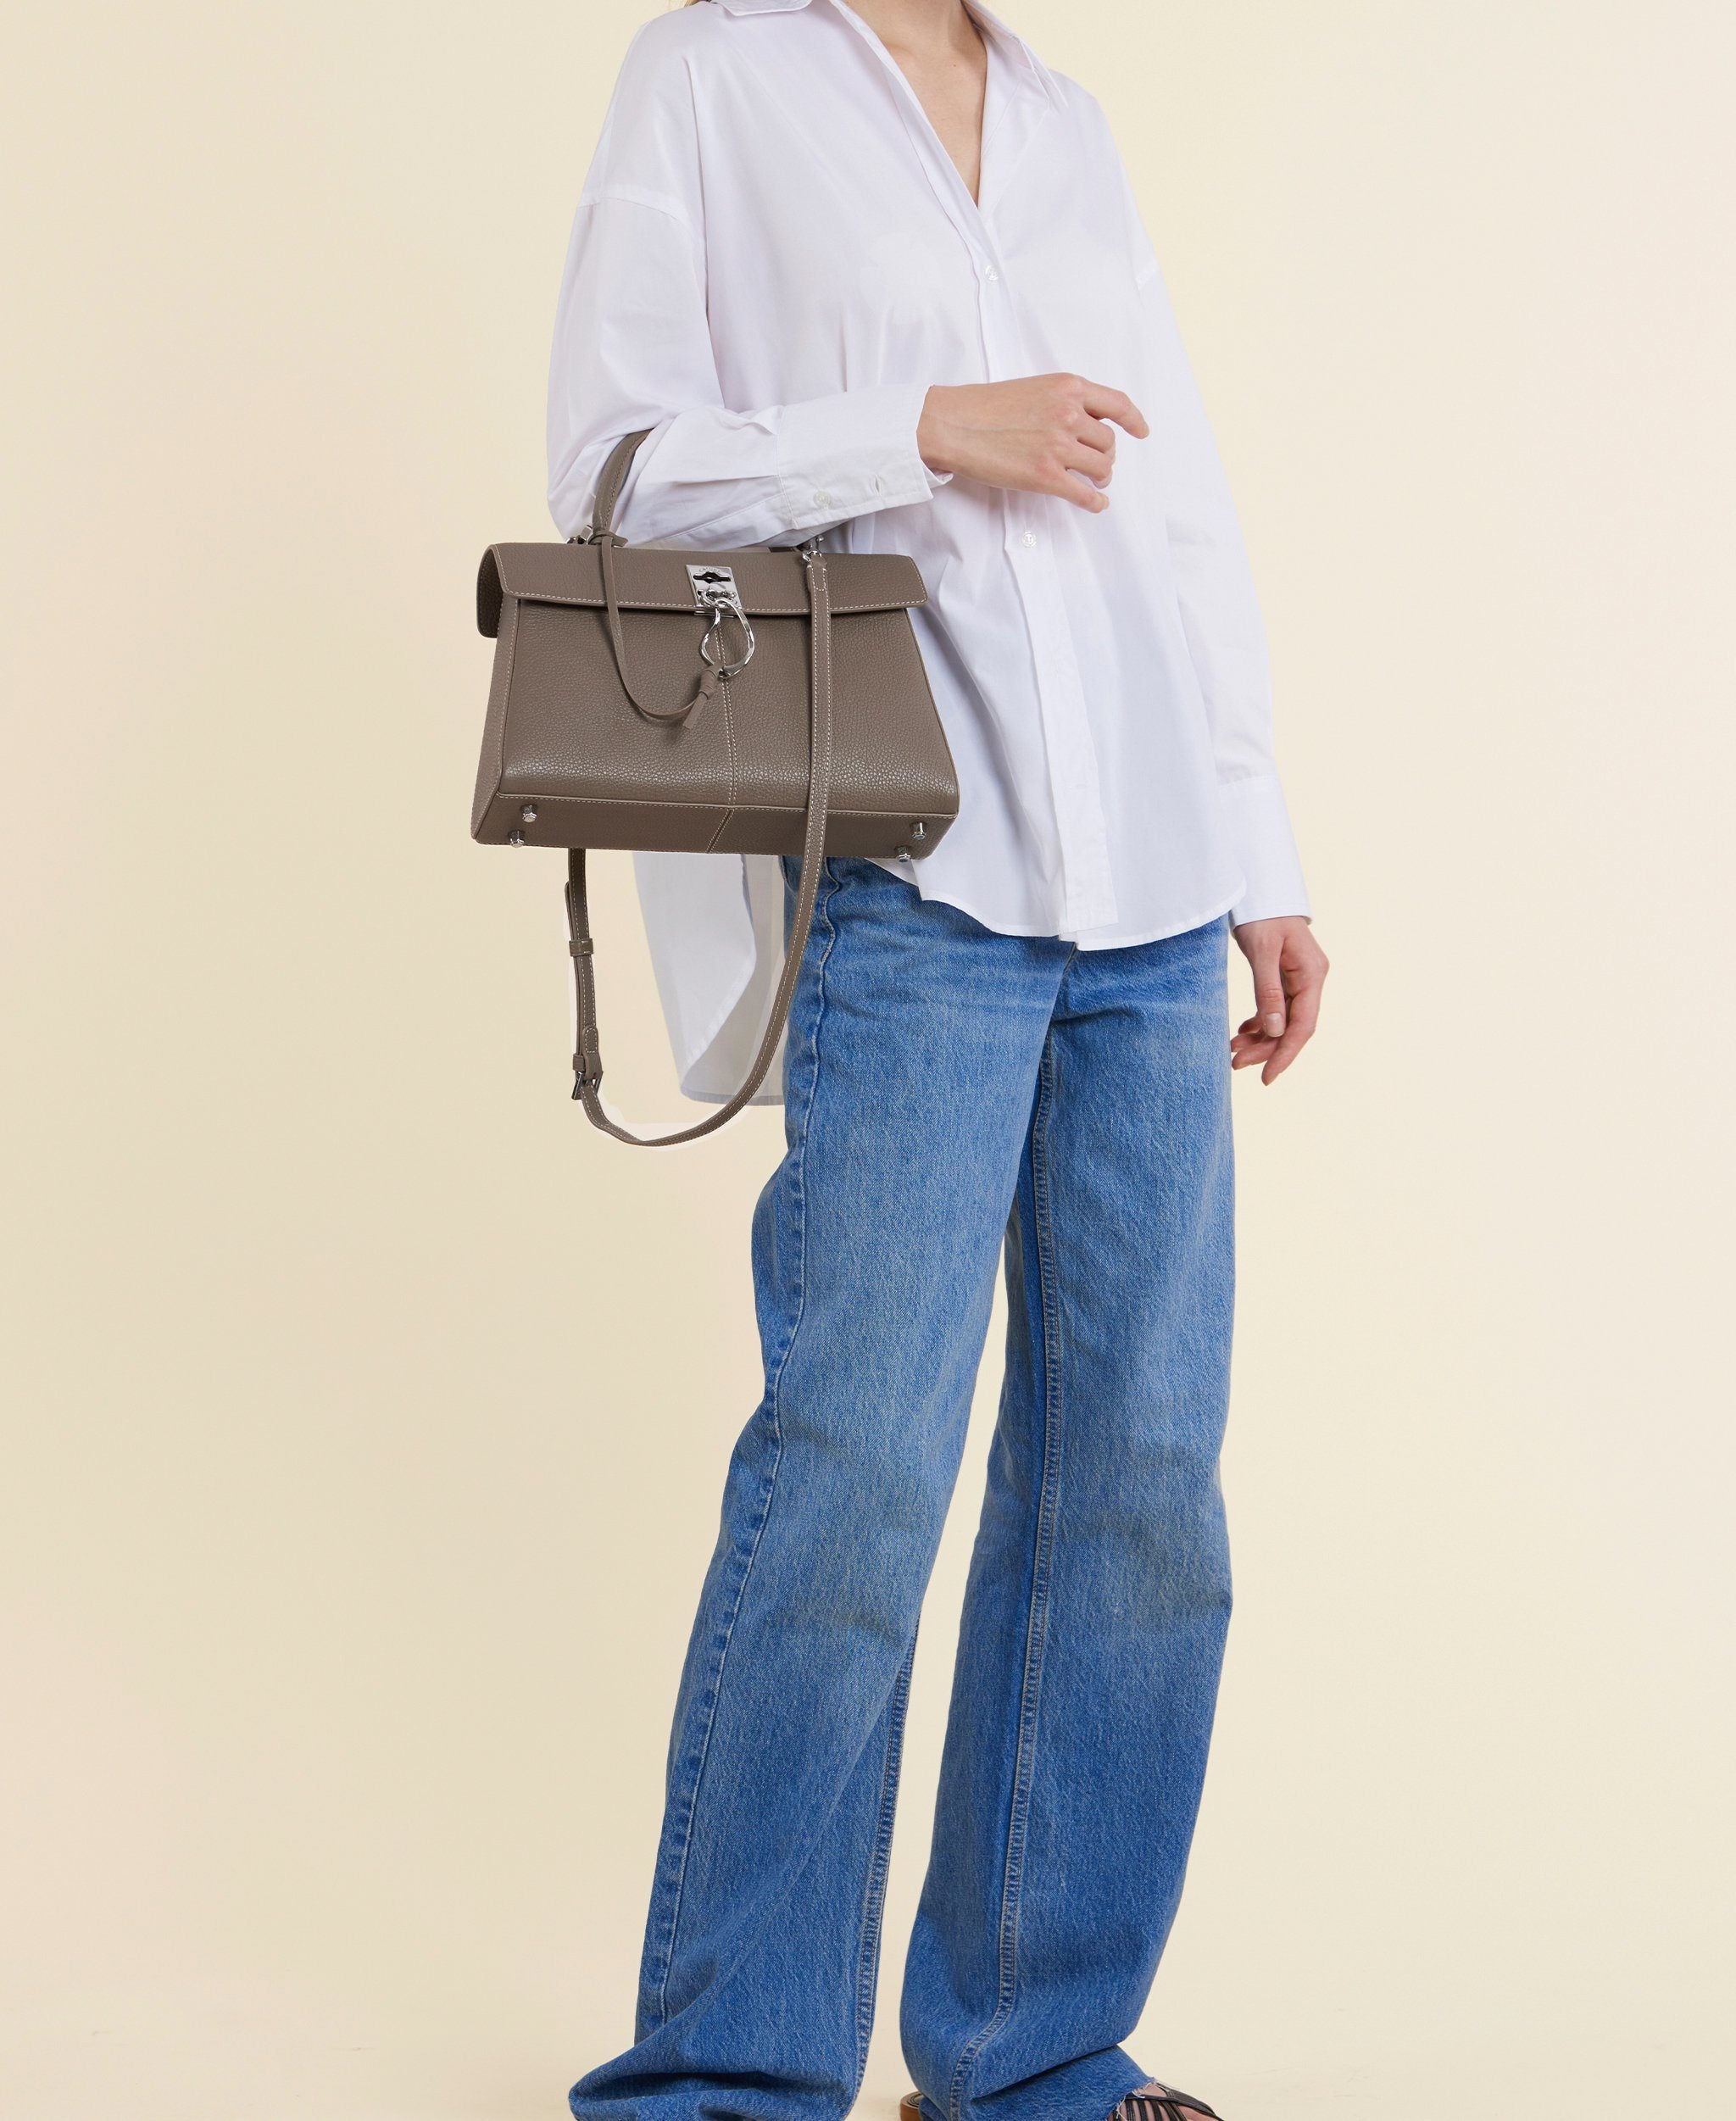 Small Stance Bag - Brownstone Handbags Cafuné